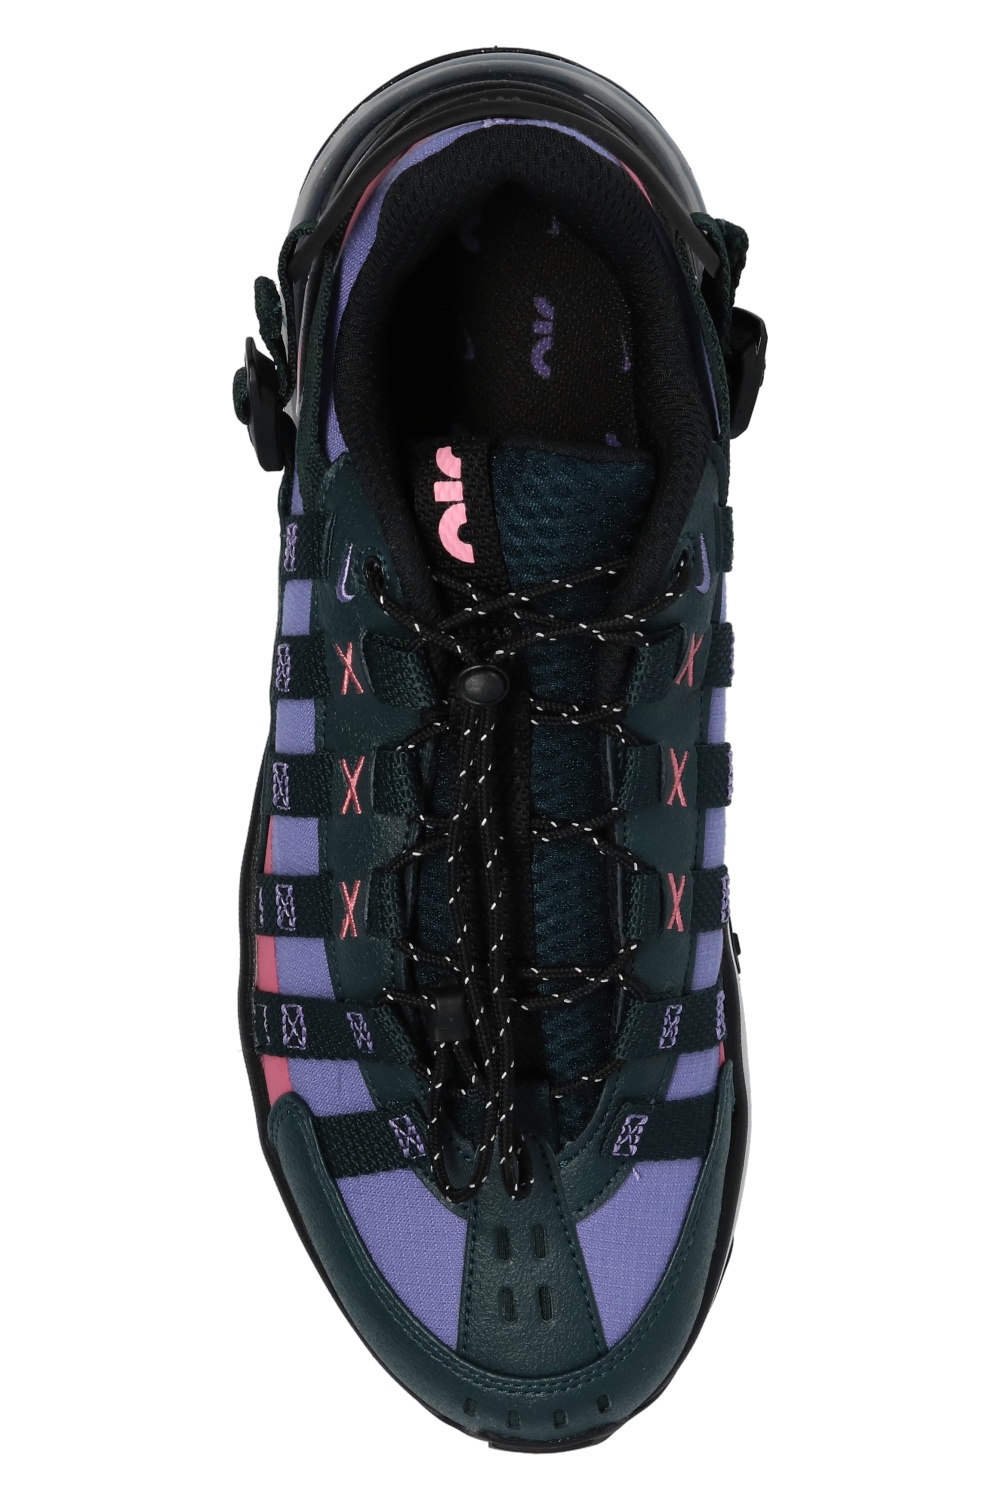 purple mens nike shoes in size 13 feet tumblr, IetpShops